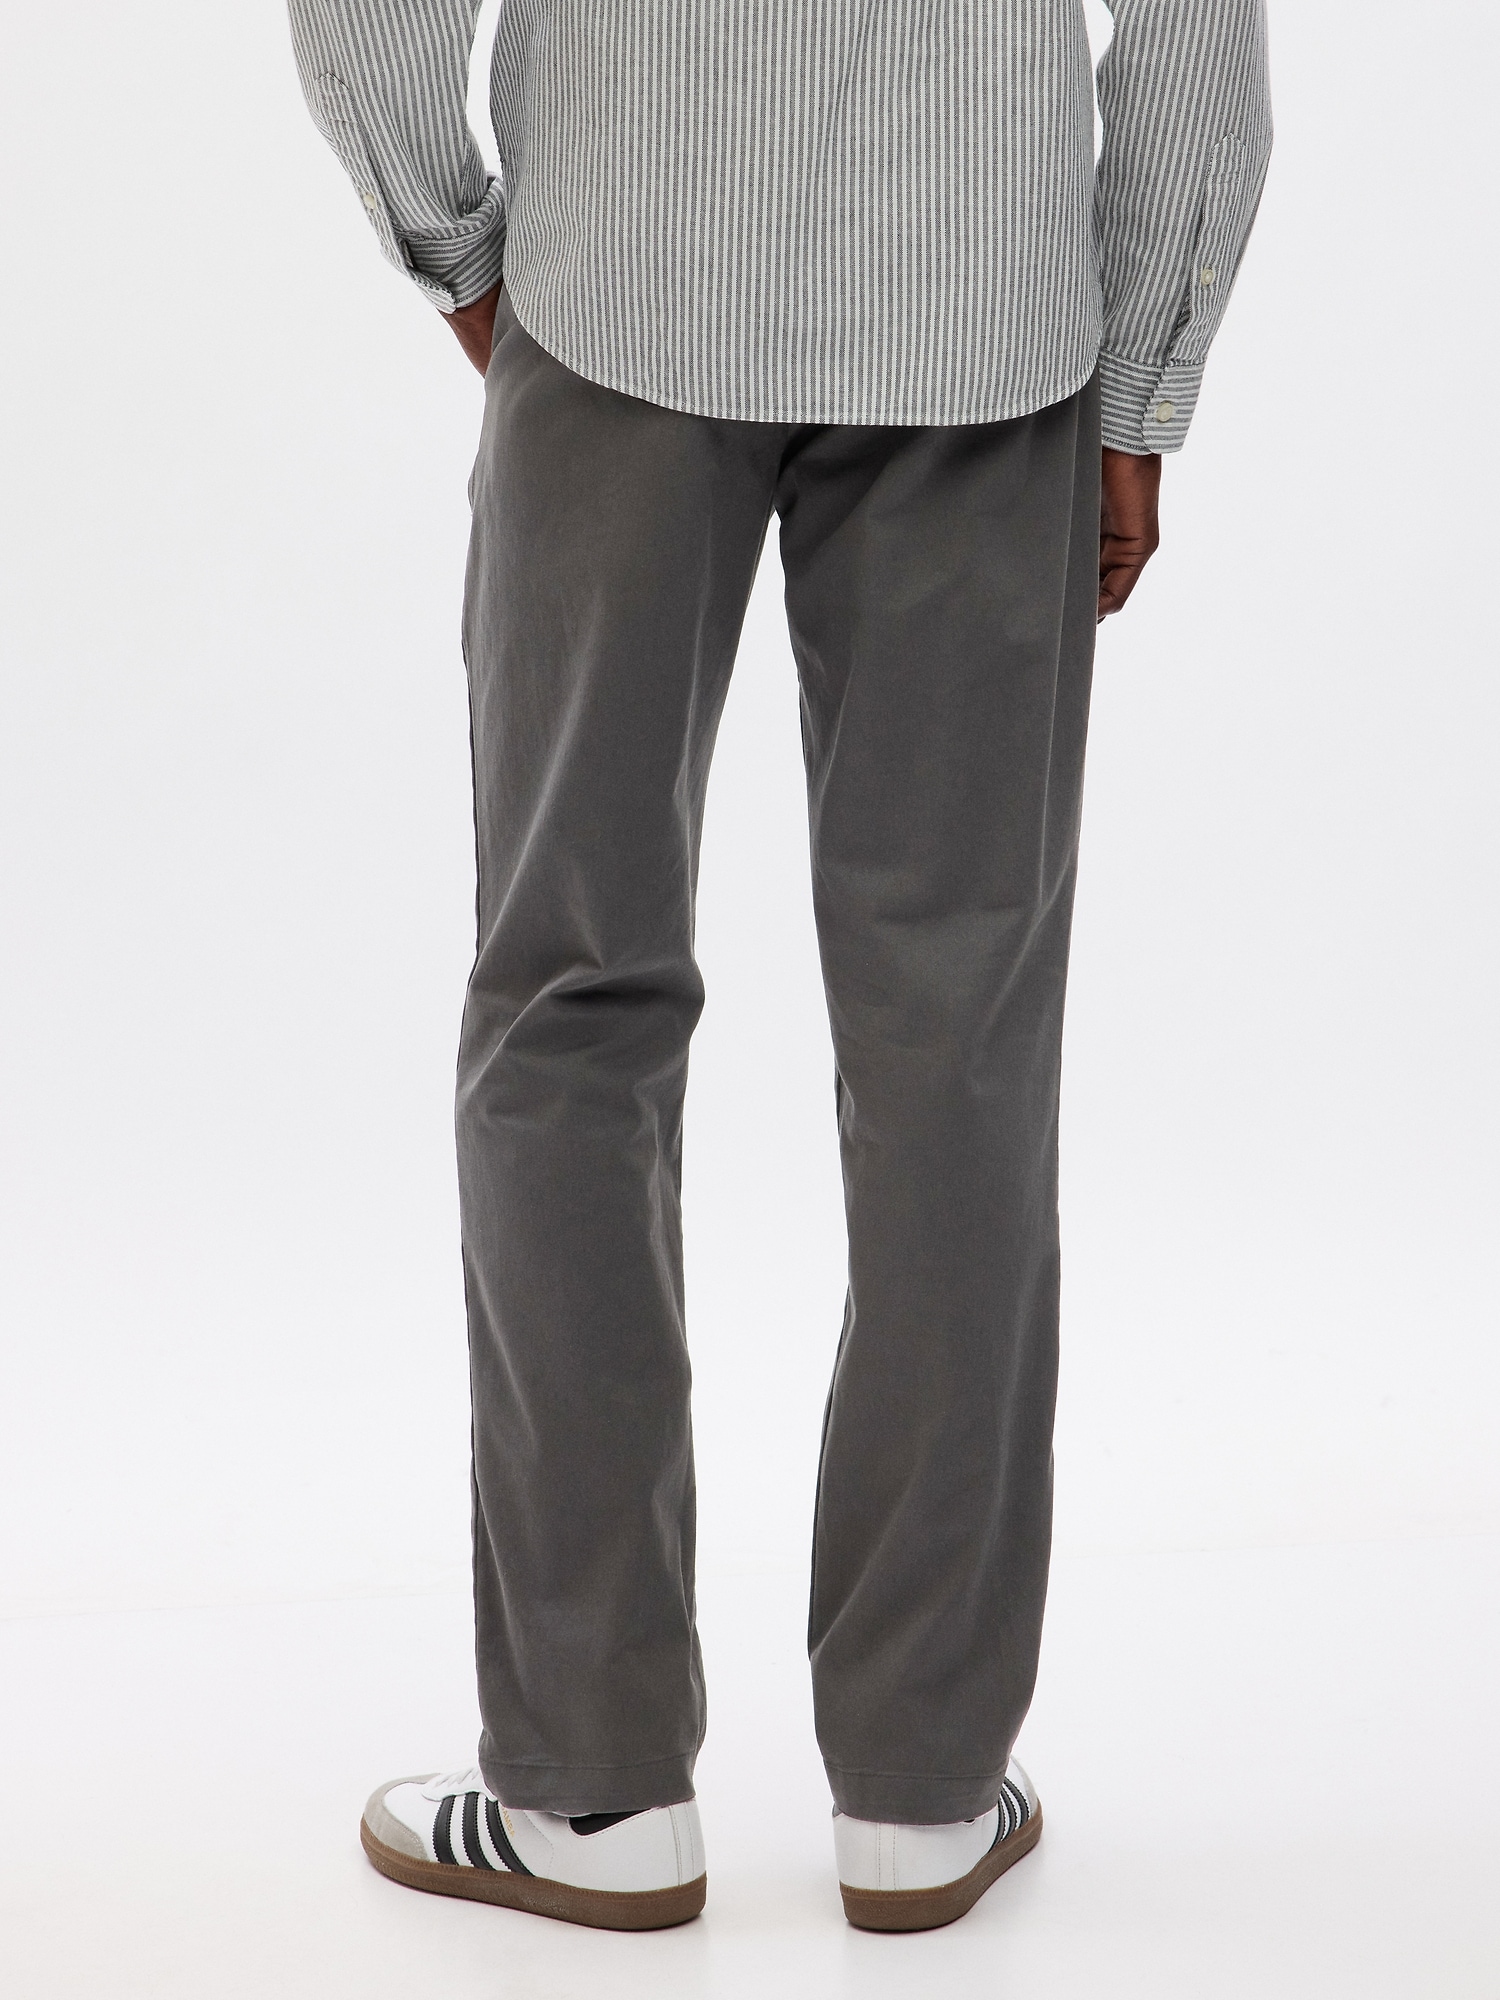 GAP, Pants, Gap Modern Khakis In Athletic Taper With Gapflex Nwt 32w 36l  Tall